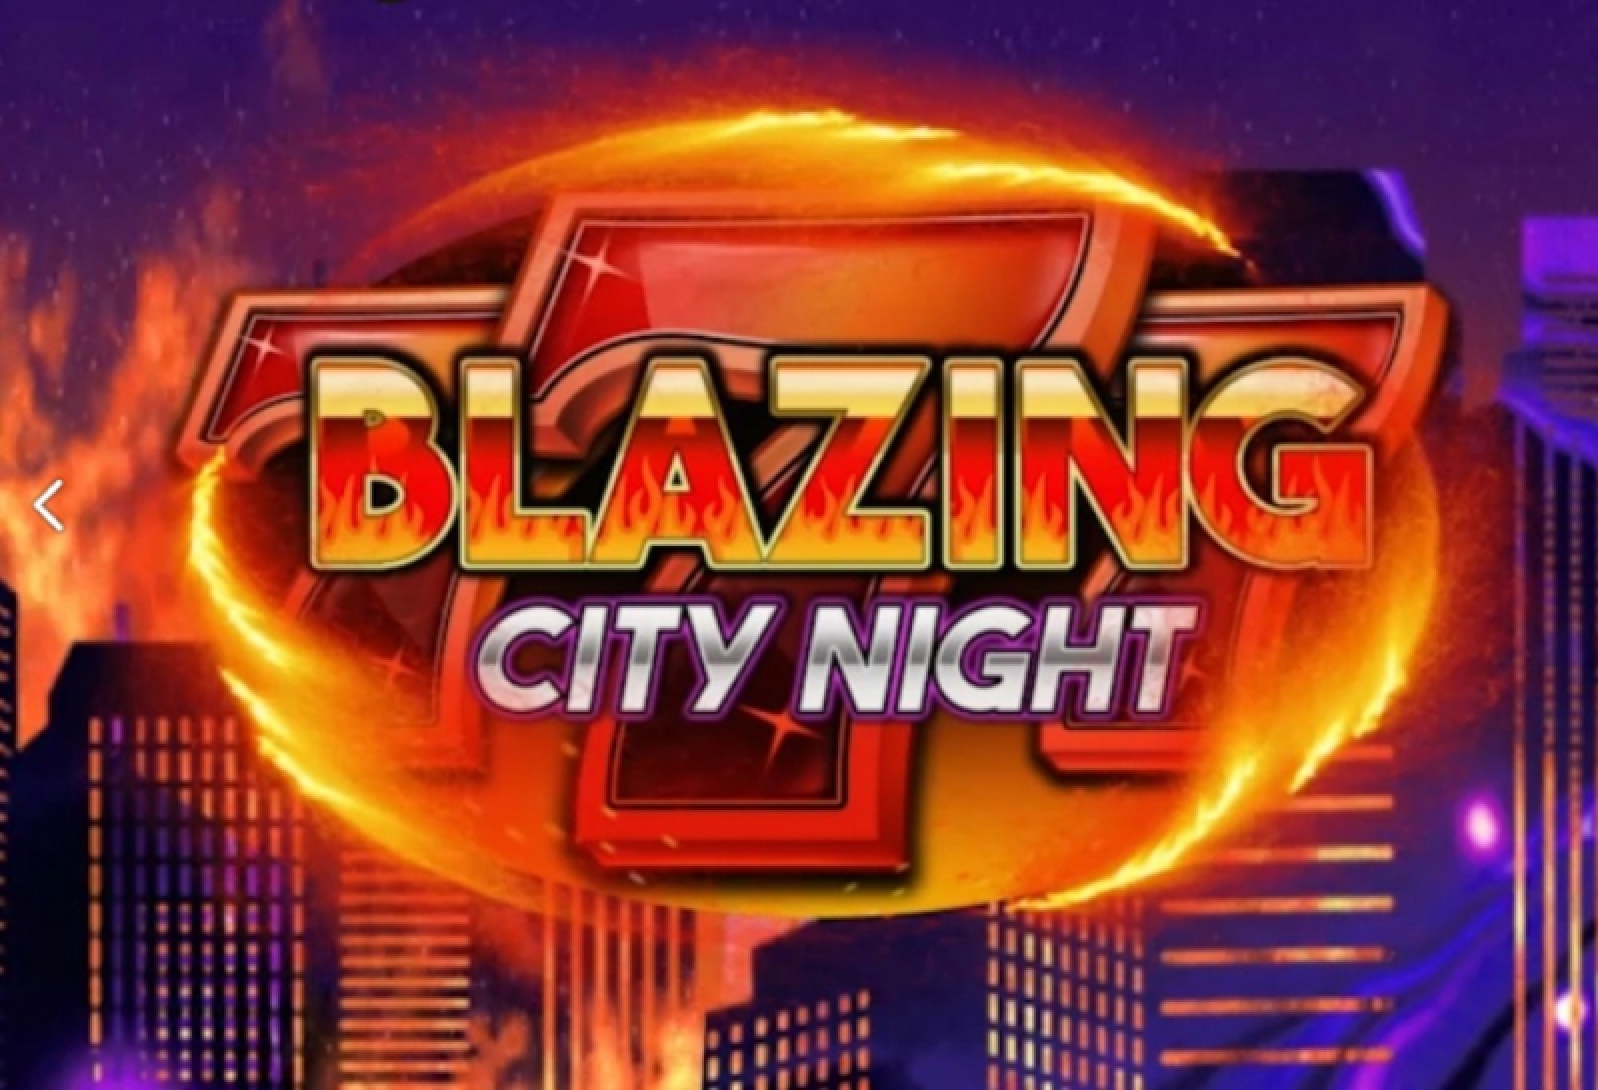 Blazing City Night